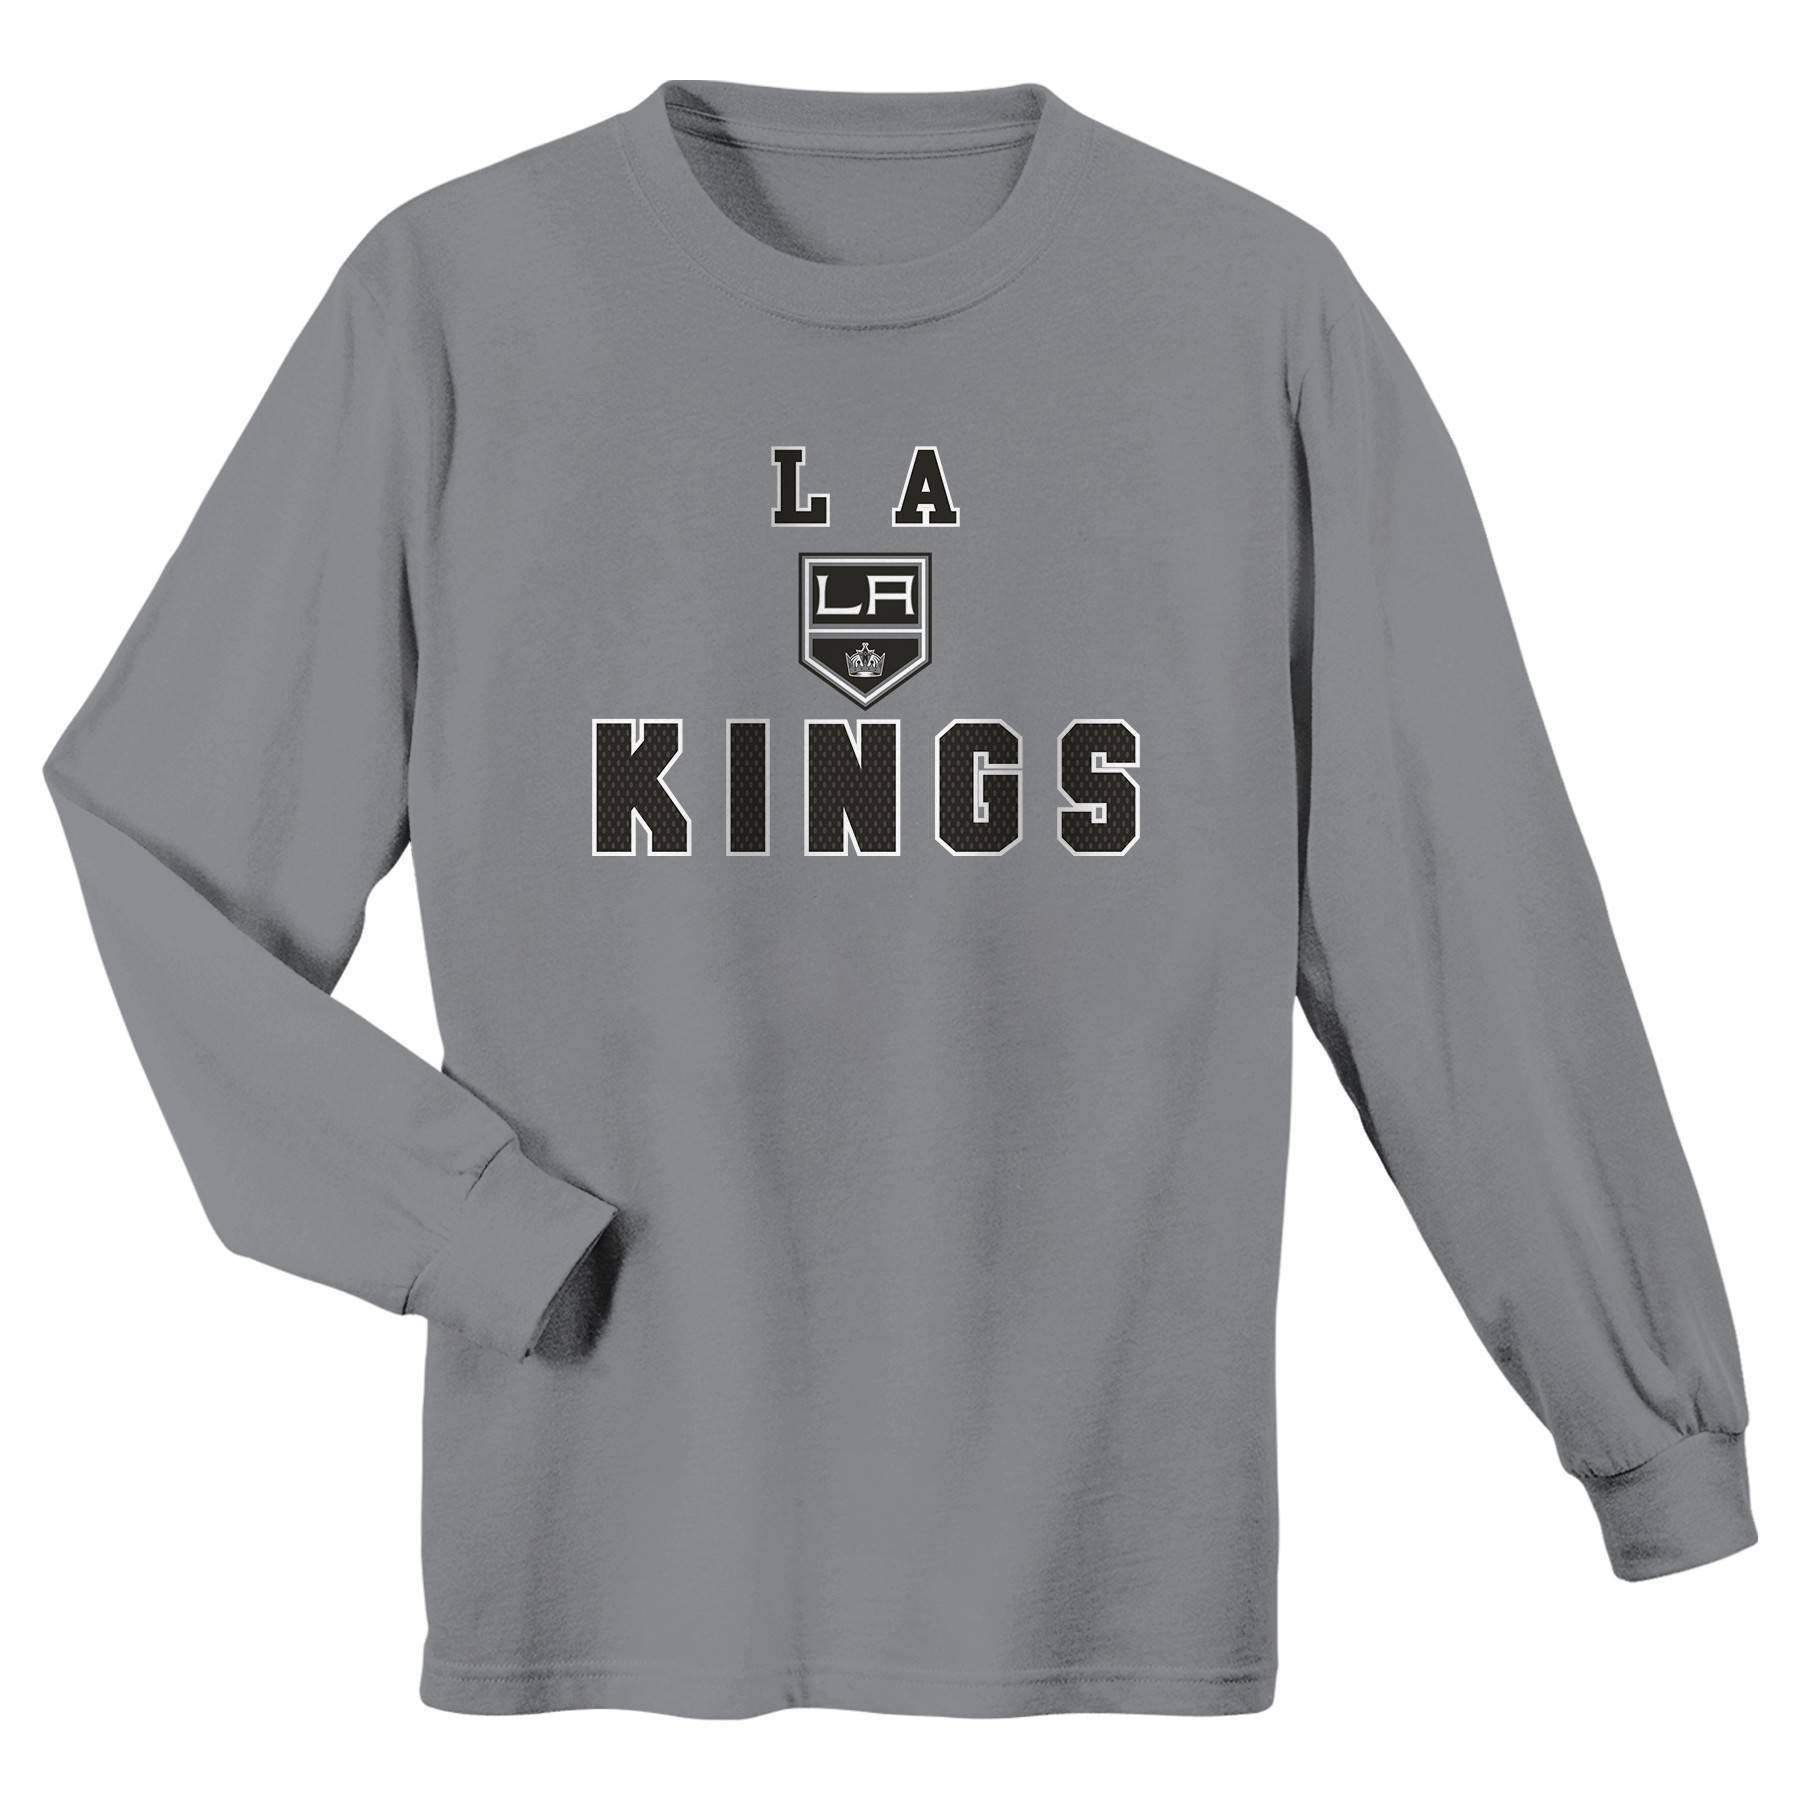 NHL Los Angeles Kings Boys' Rink Rat Long Sleeve T-Shirt - XL 1 ct